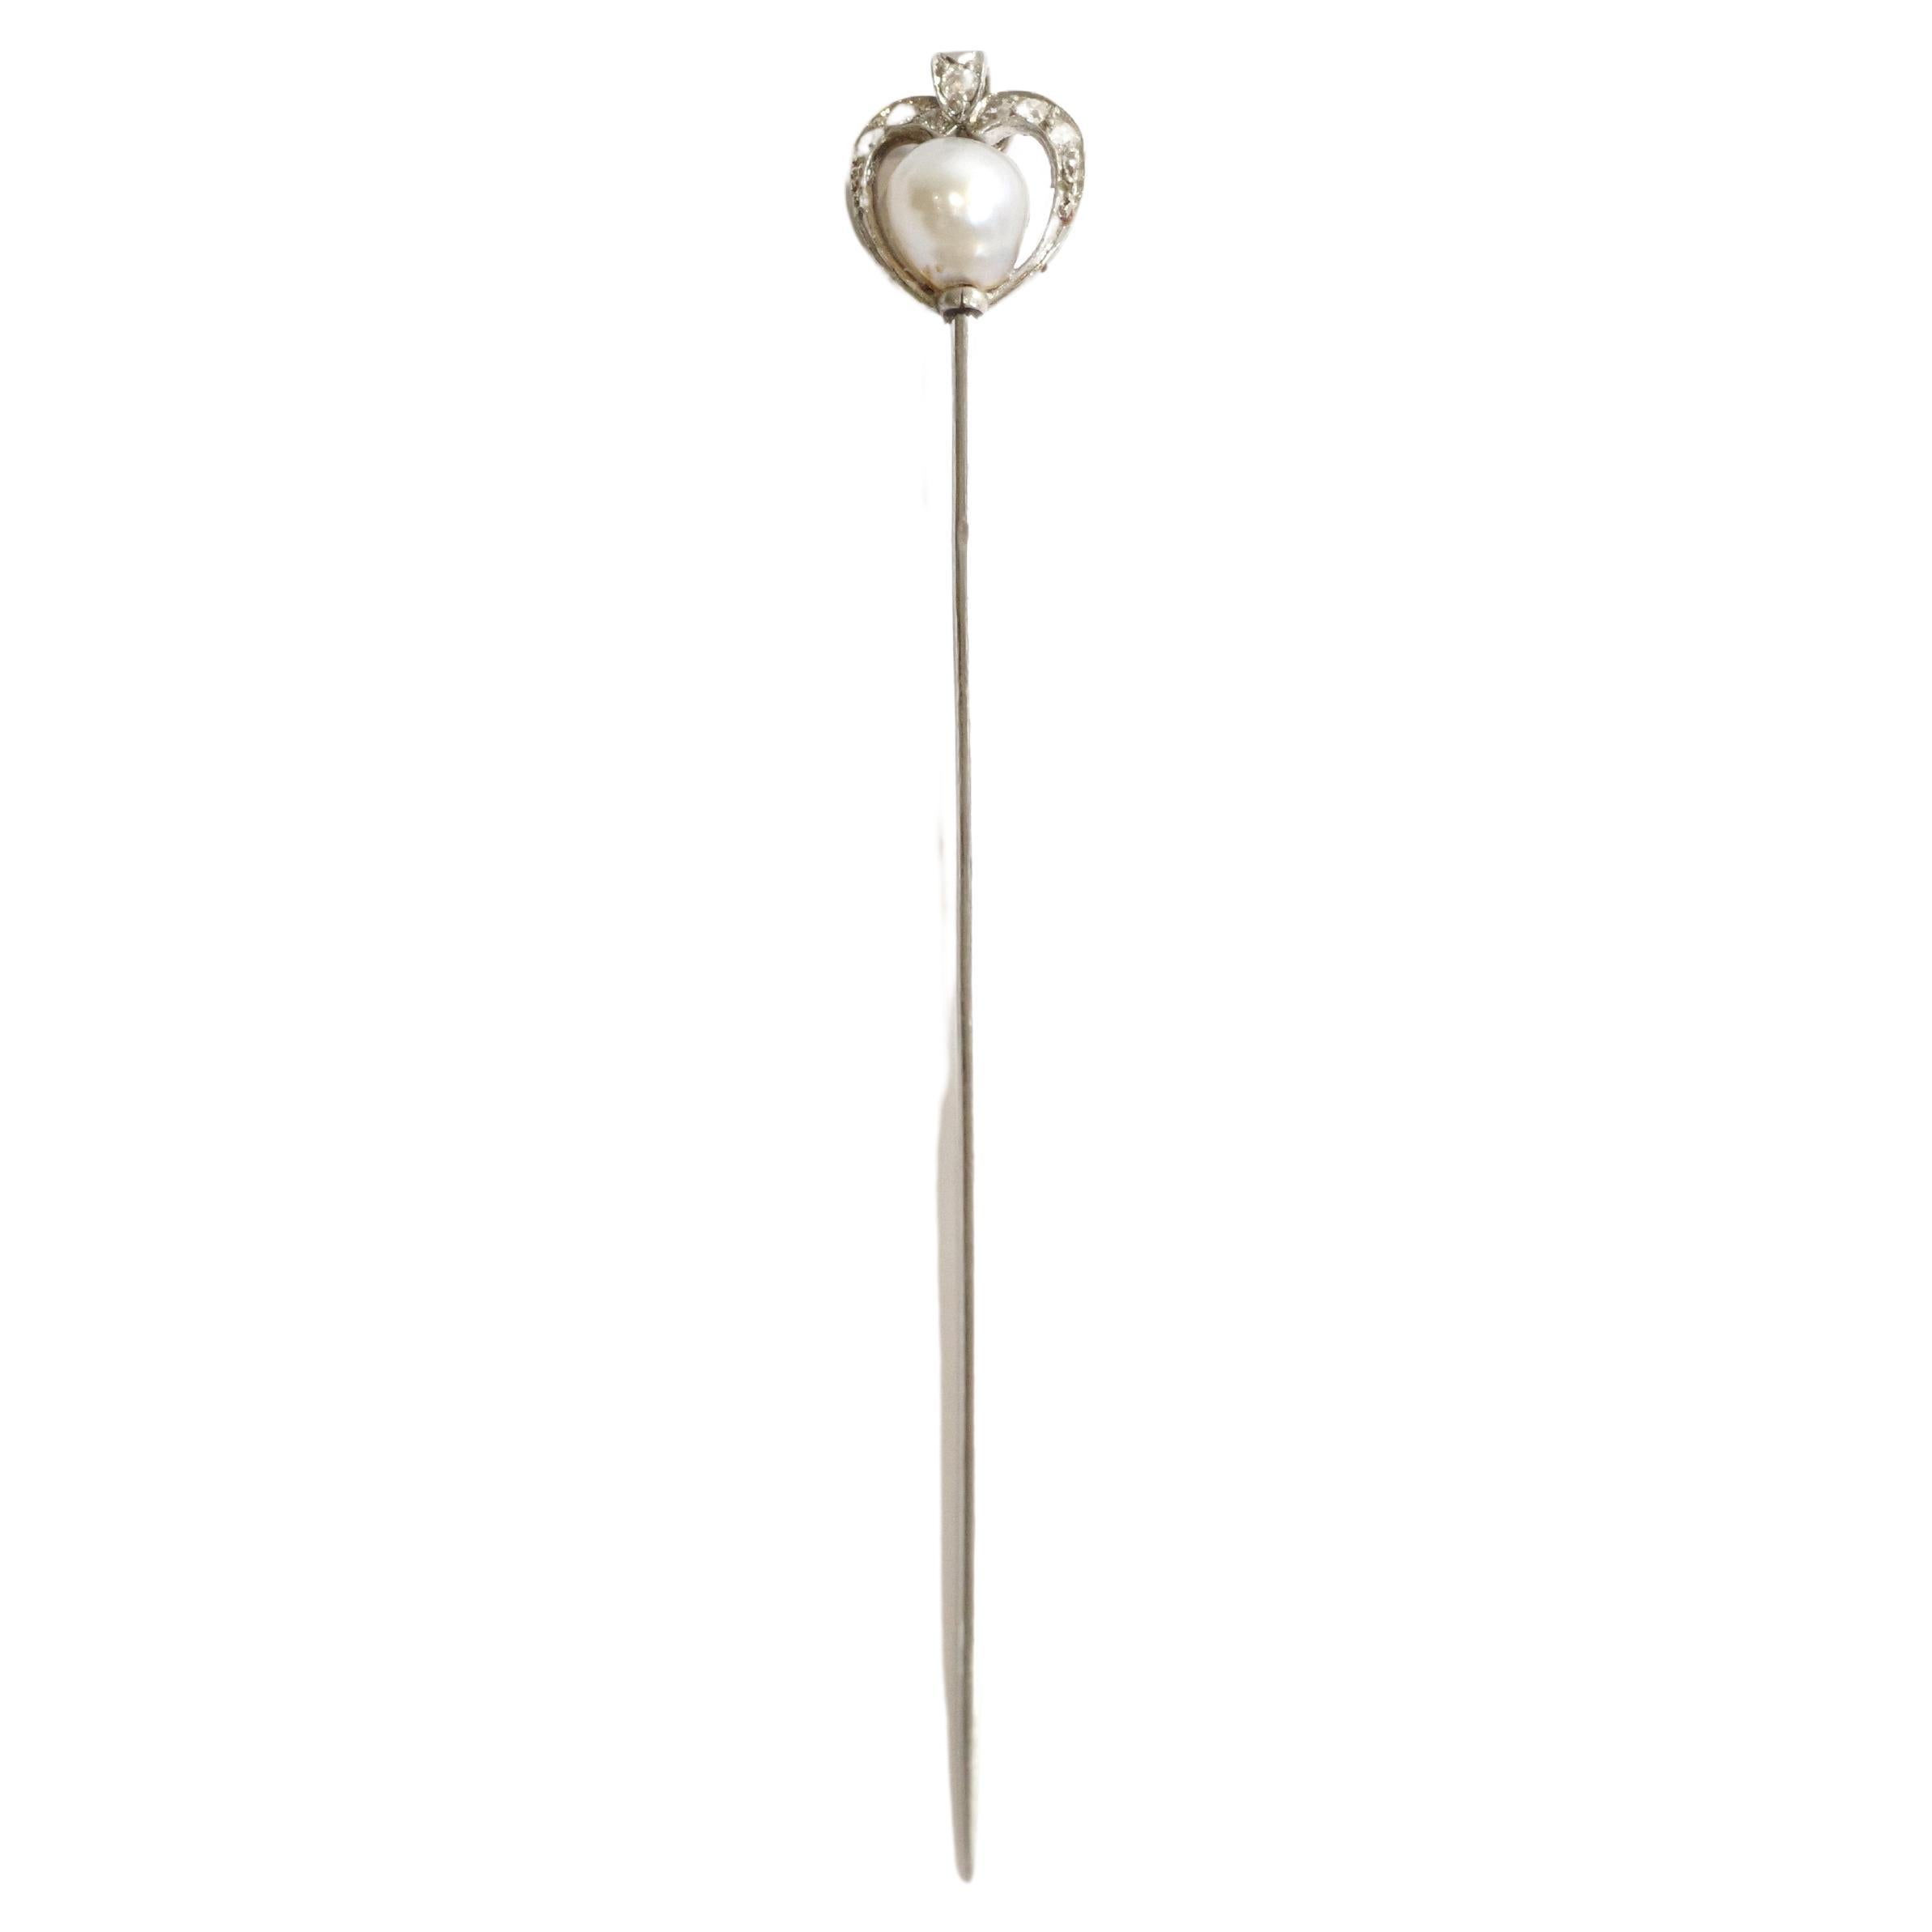 Natural pearl and diamond tie pin in platinum